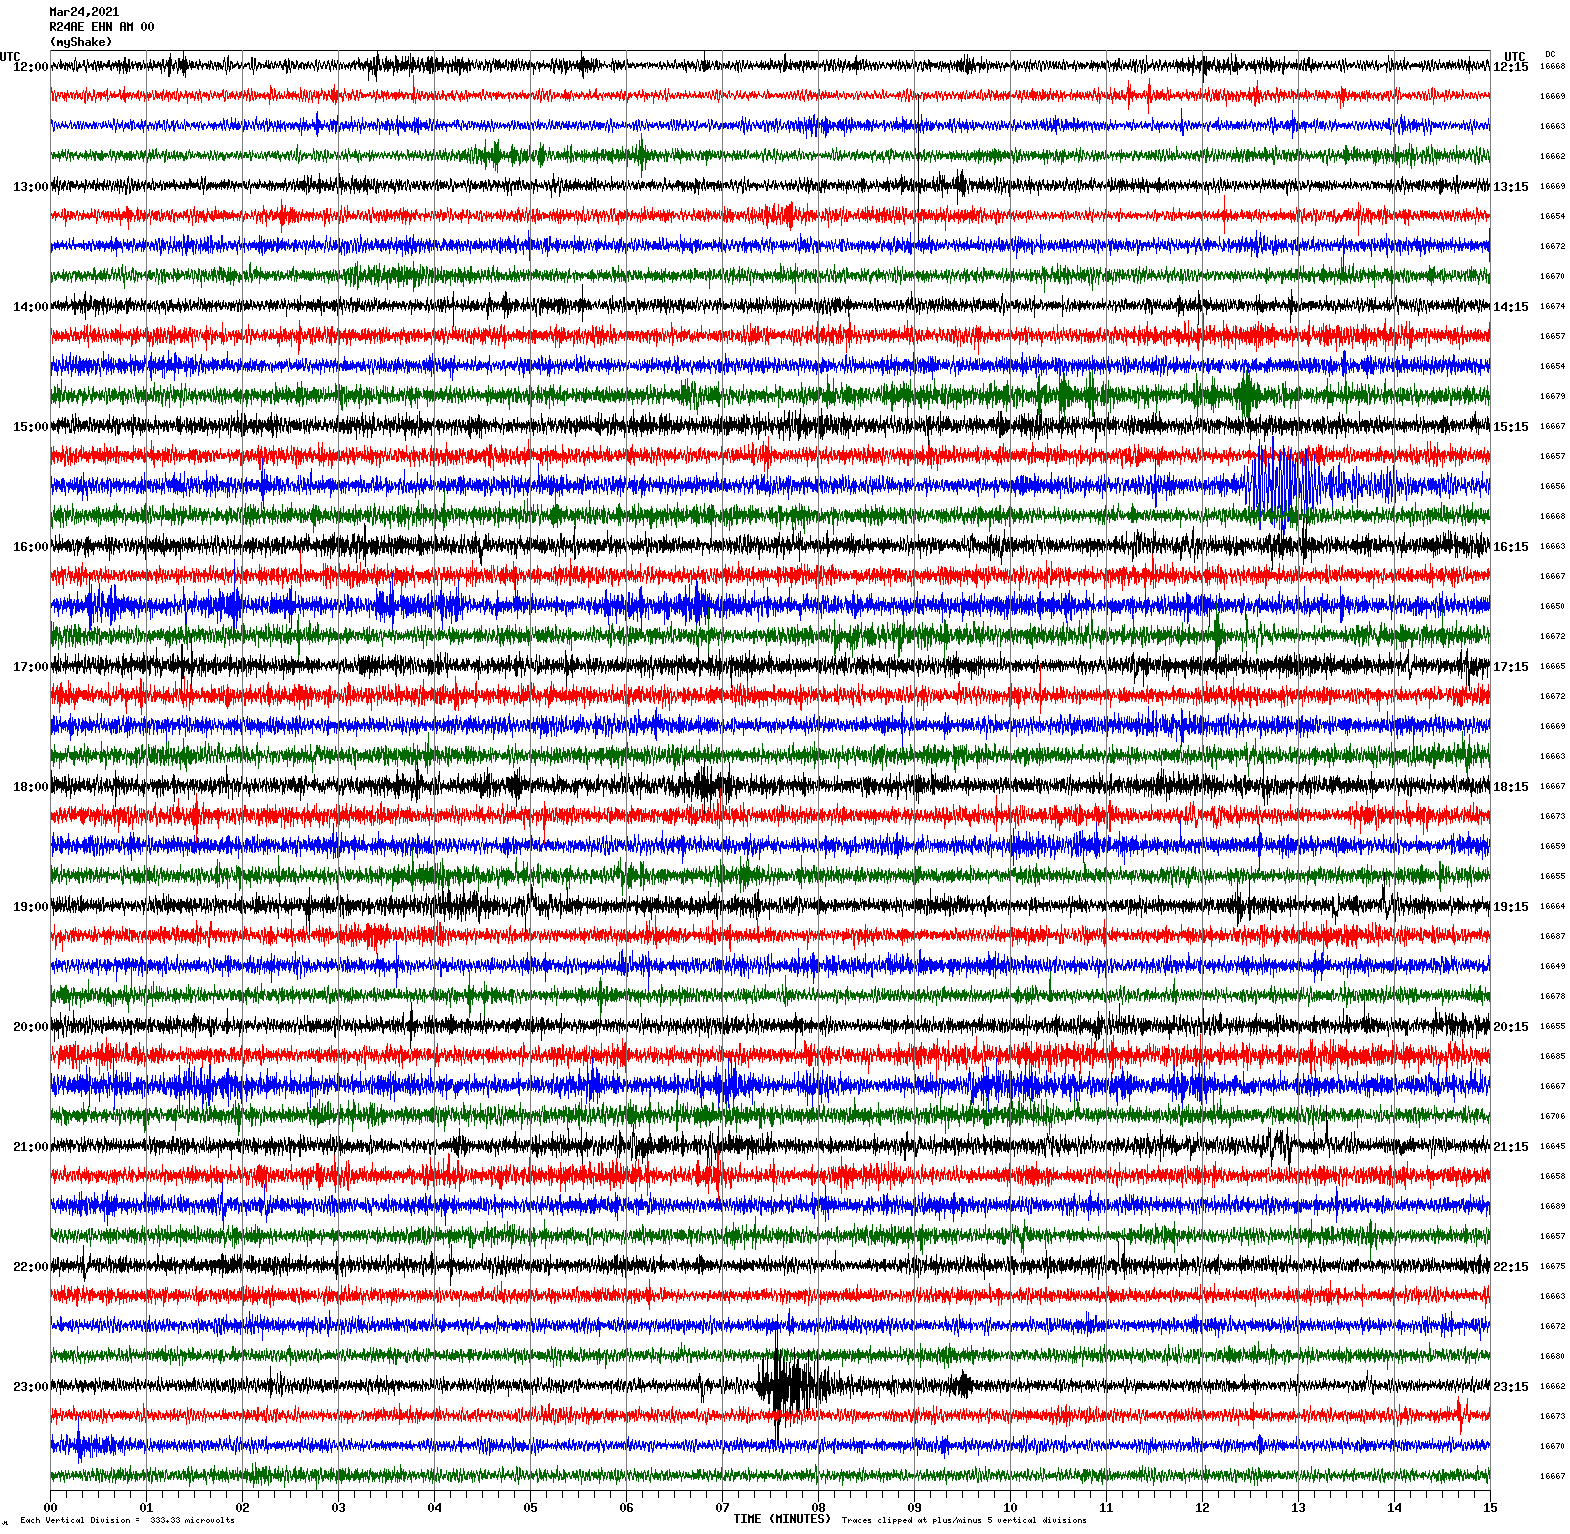 /seismic-data/R24AE/R24AE_EHN_AM_00.2021032412.gif